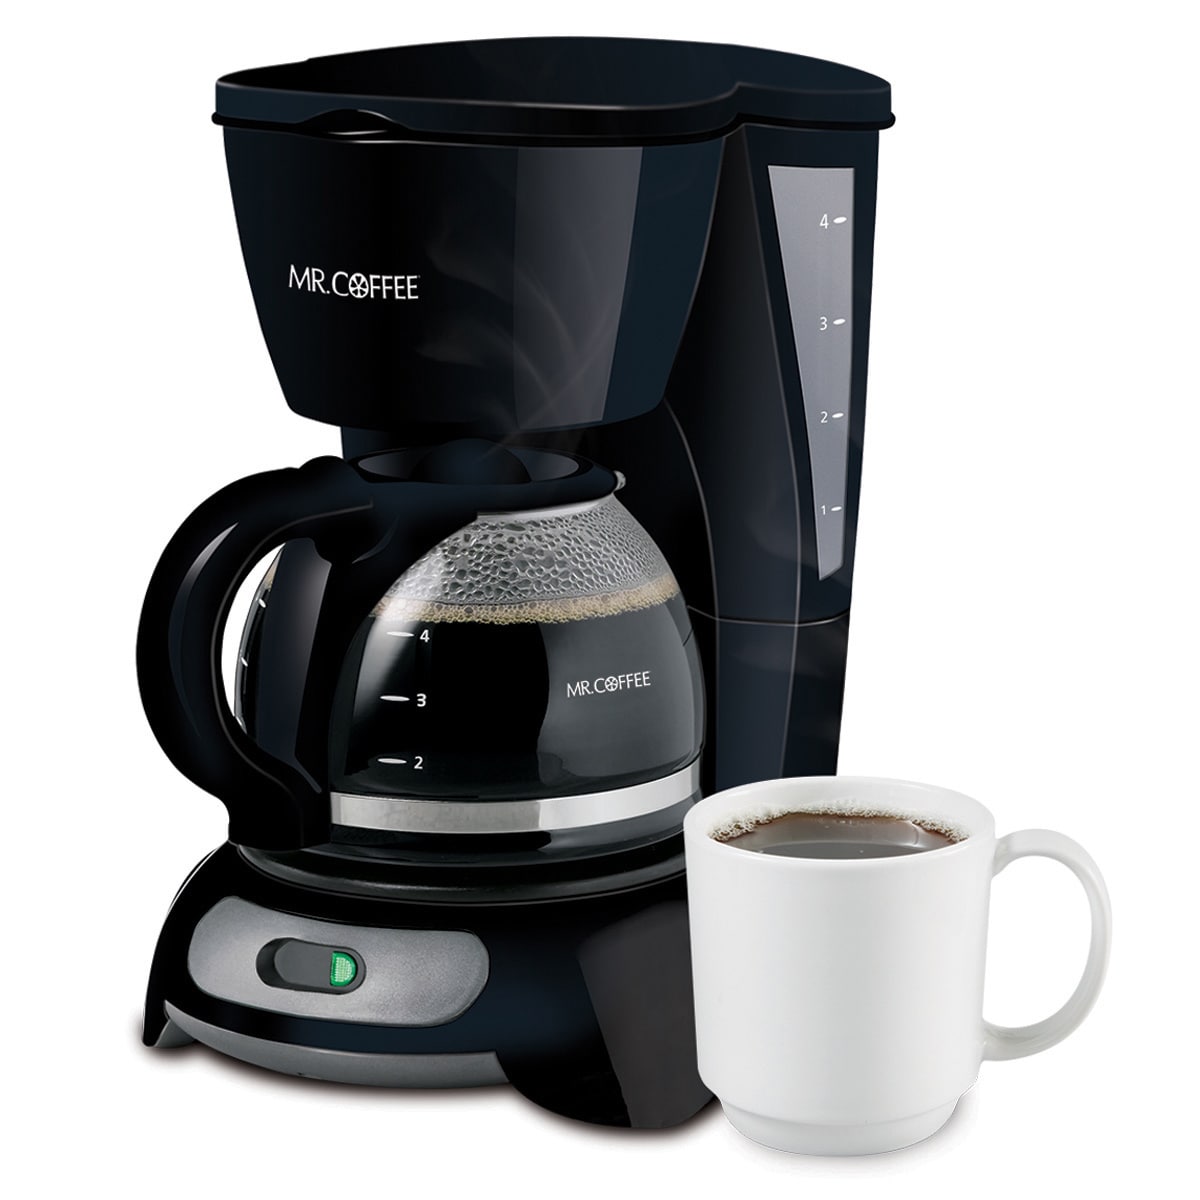 https://ak1.ostkcdn.com/images/products/3207385/4c-Coffeemaker-Black-e86f05d8-0688-469a-aeb1-af7bc0595240.jpg